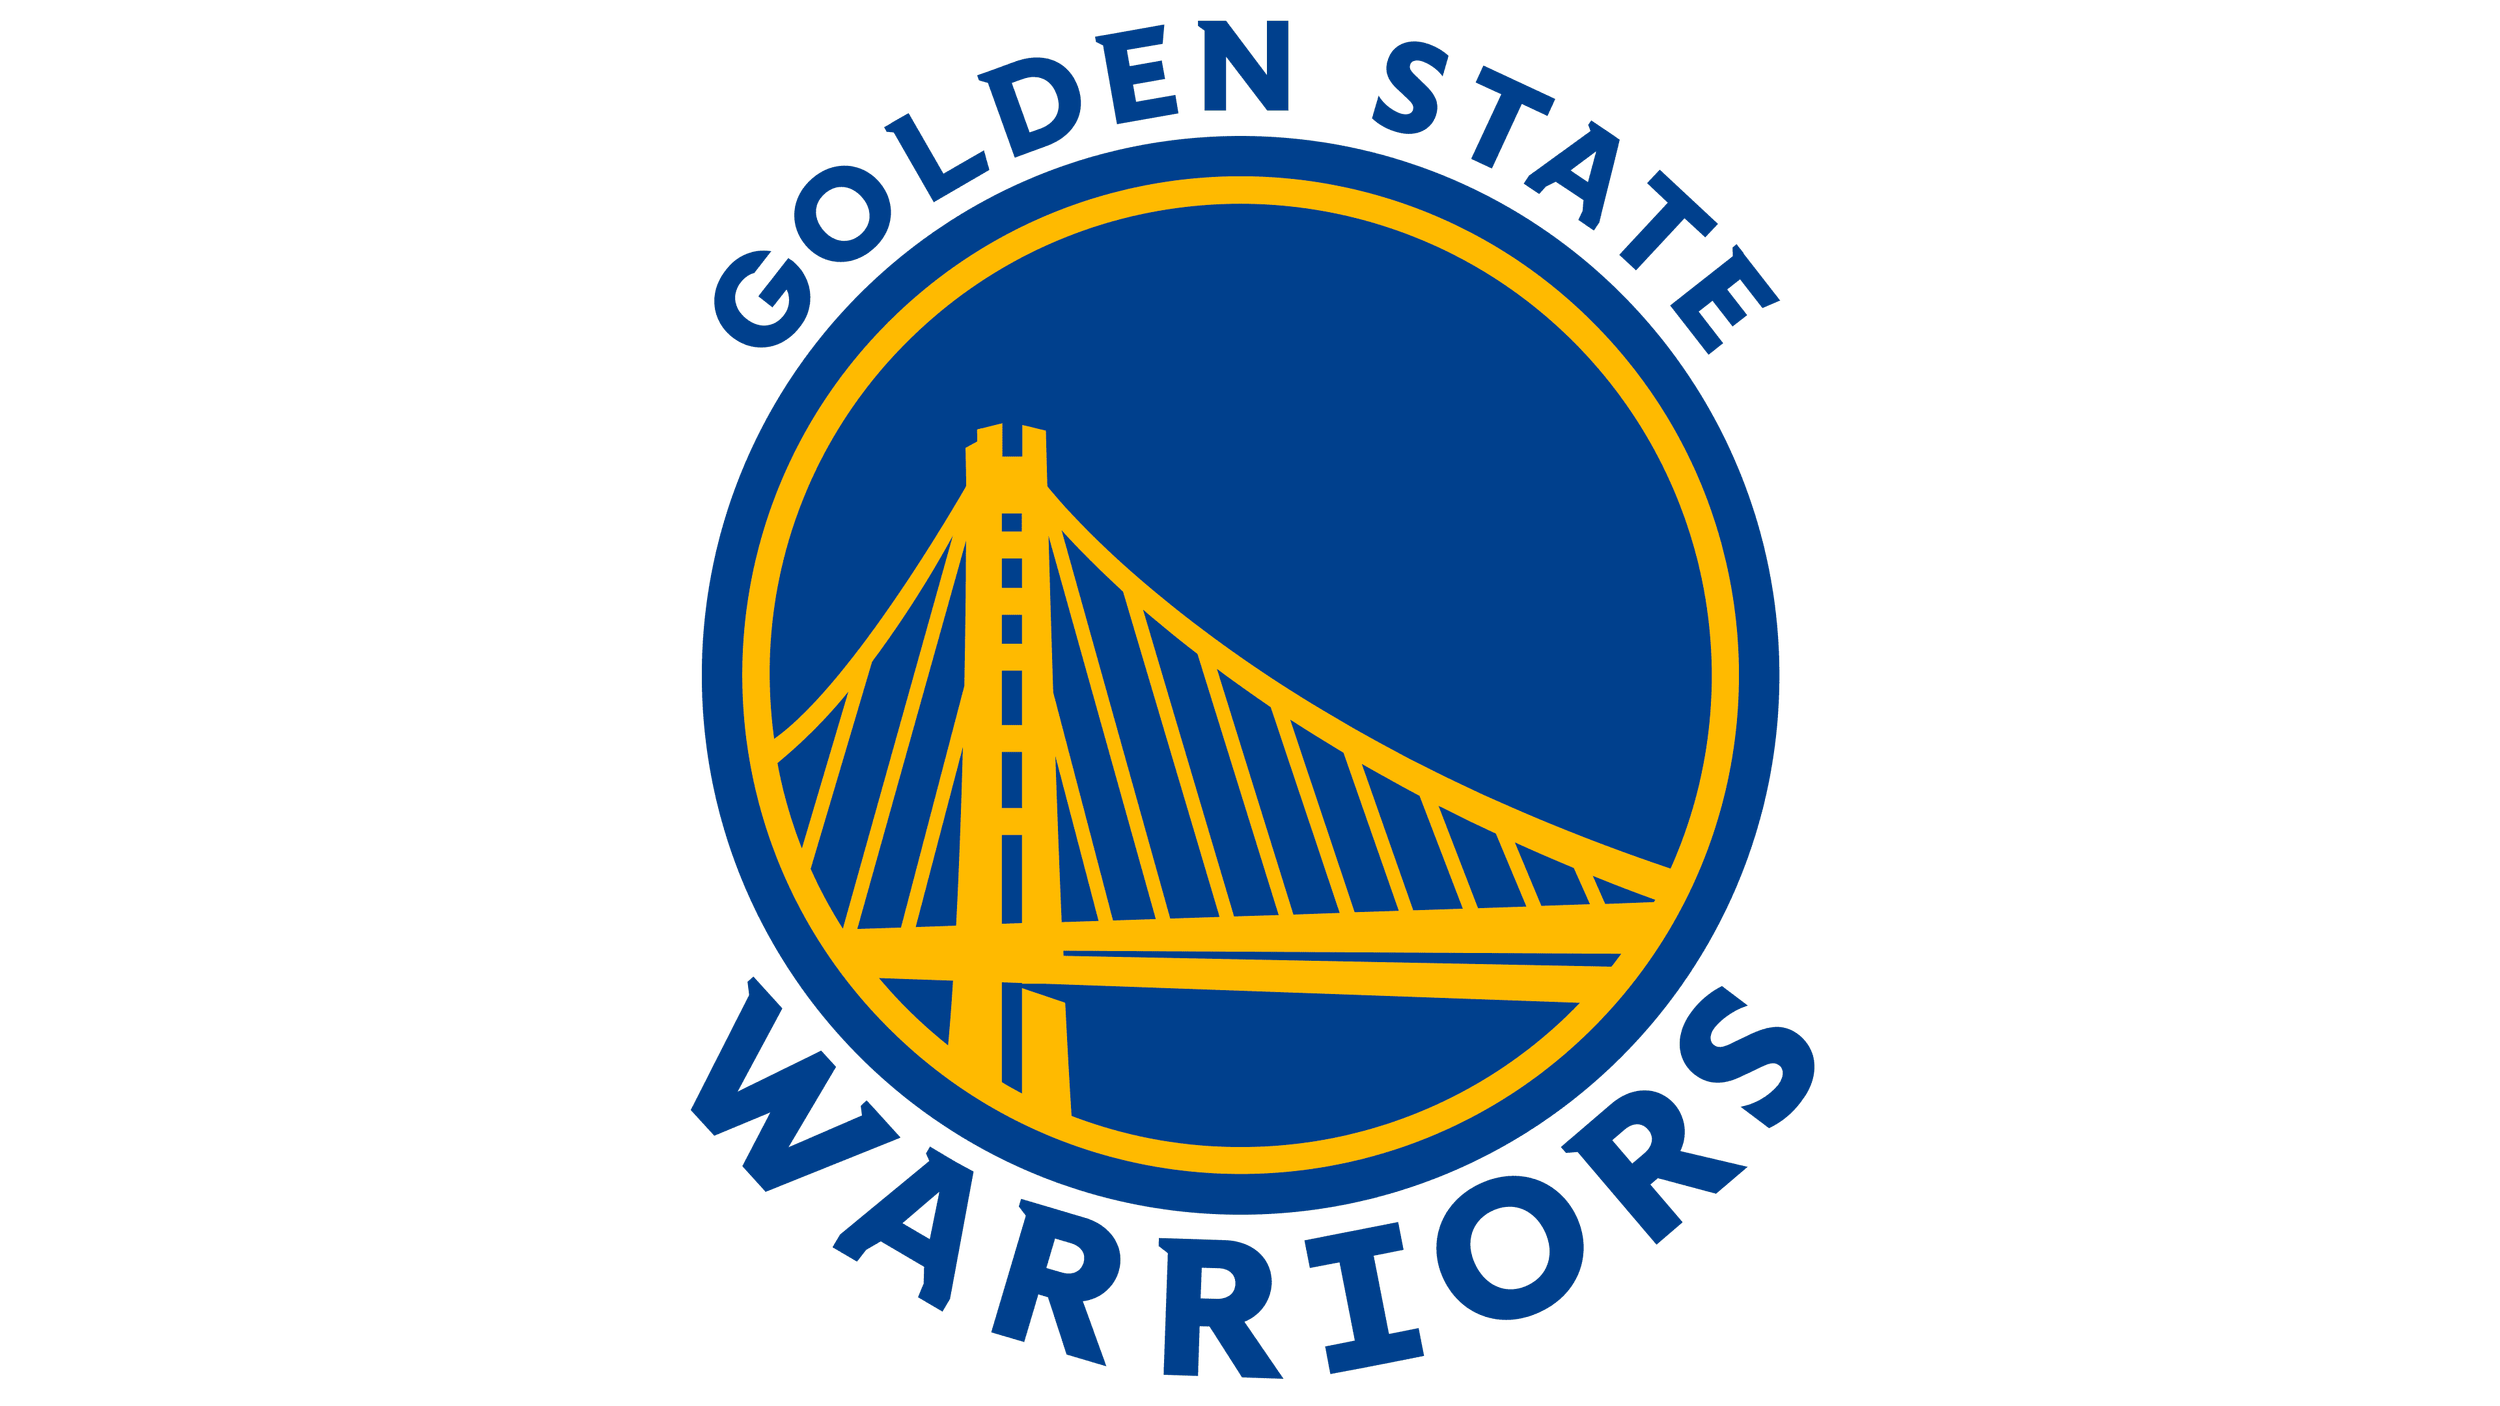 Golden-State-Warriors-logo.png